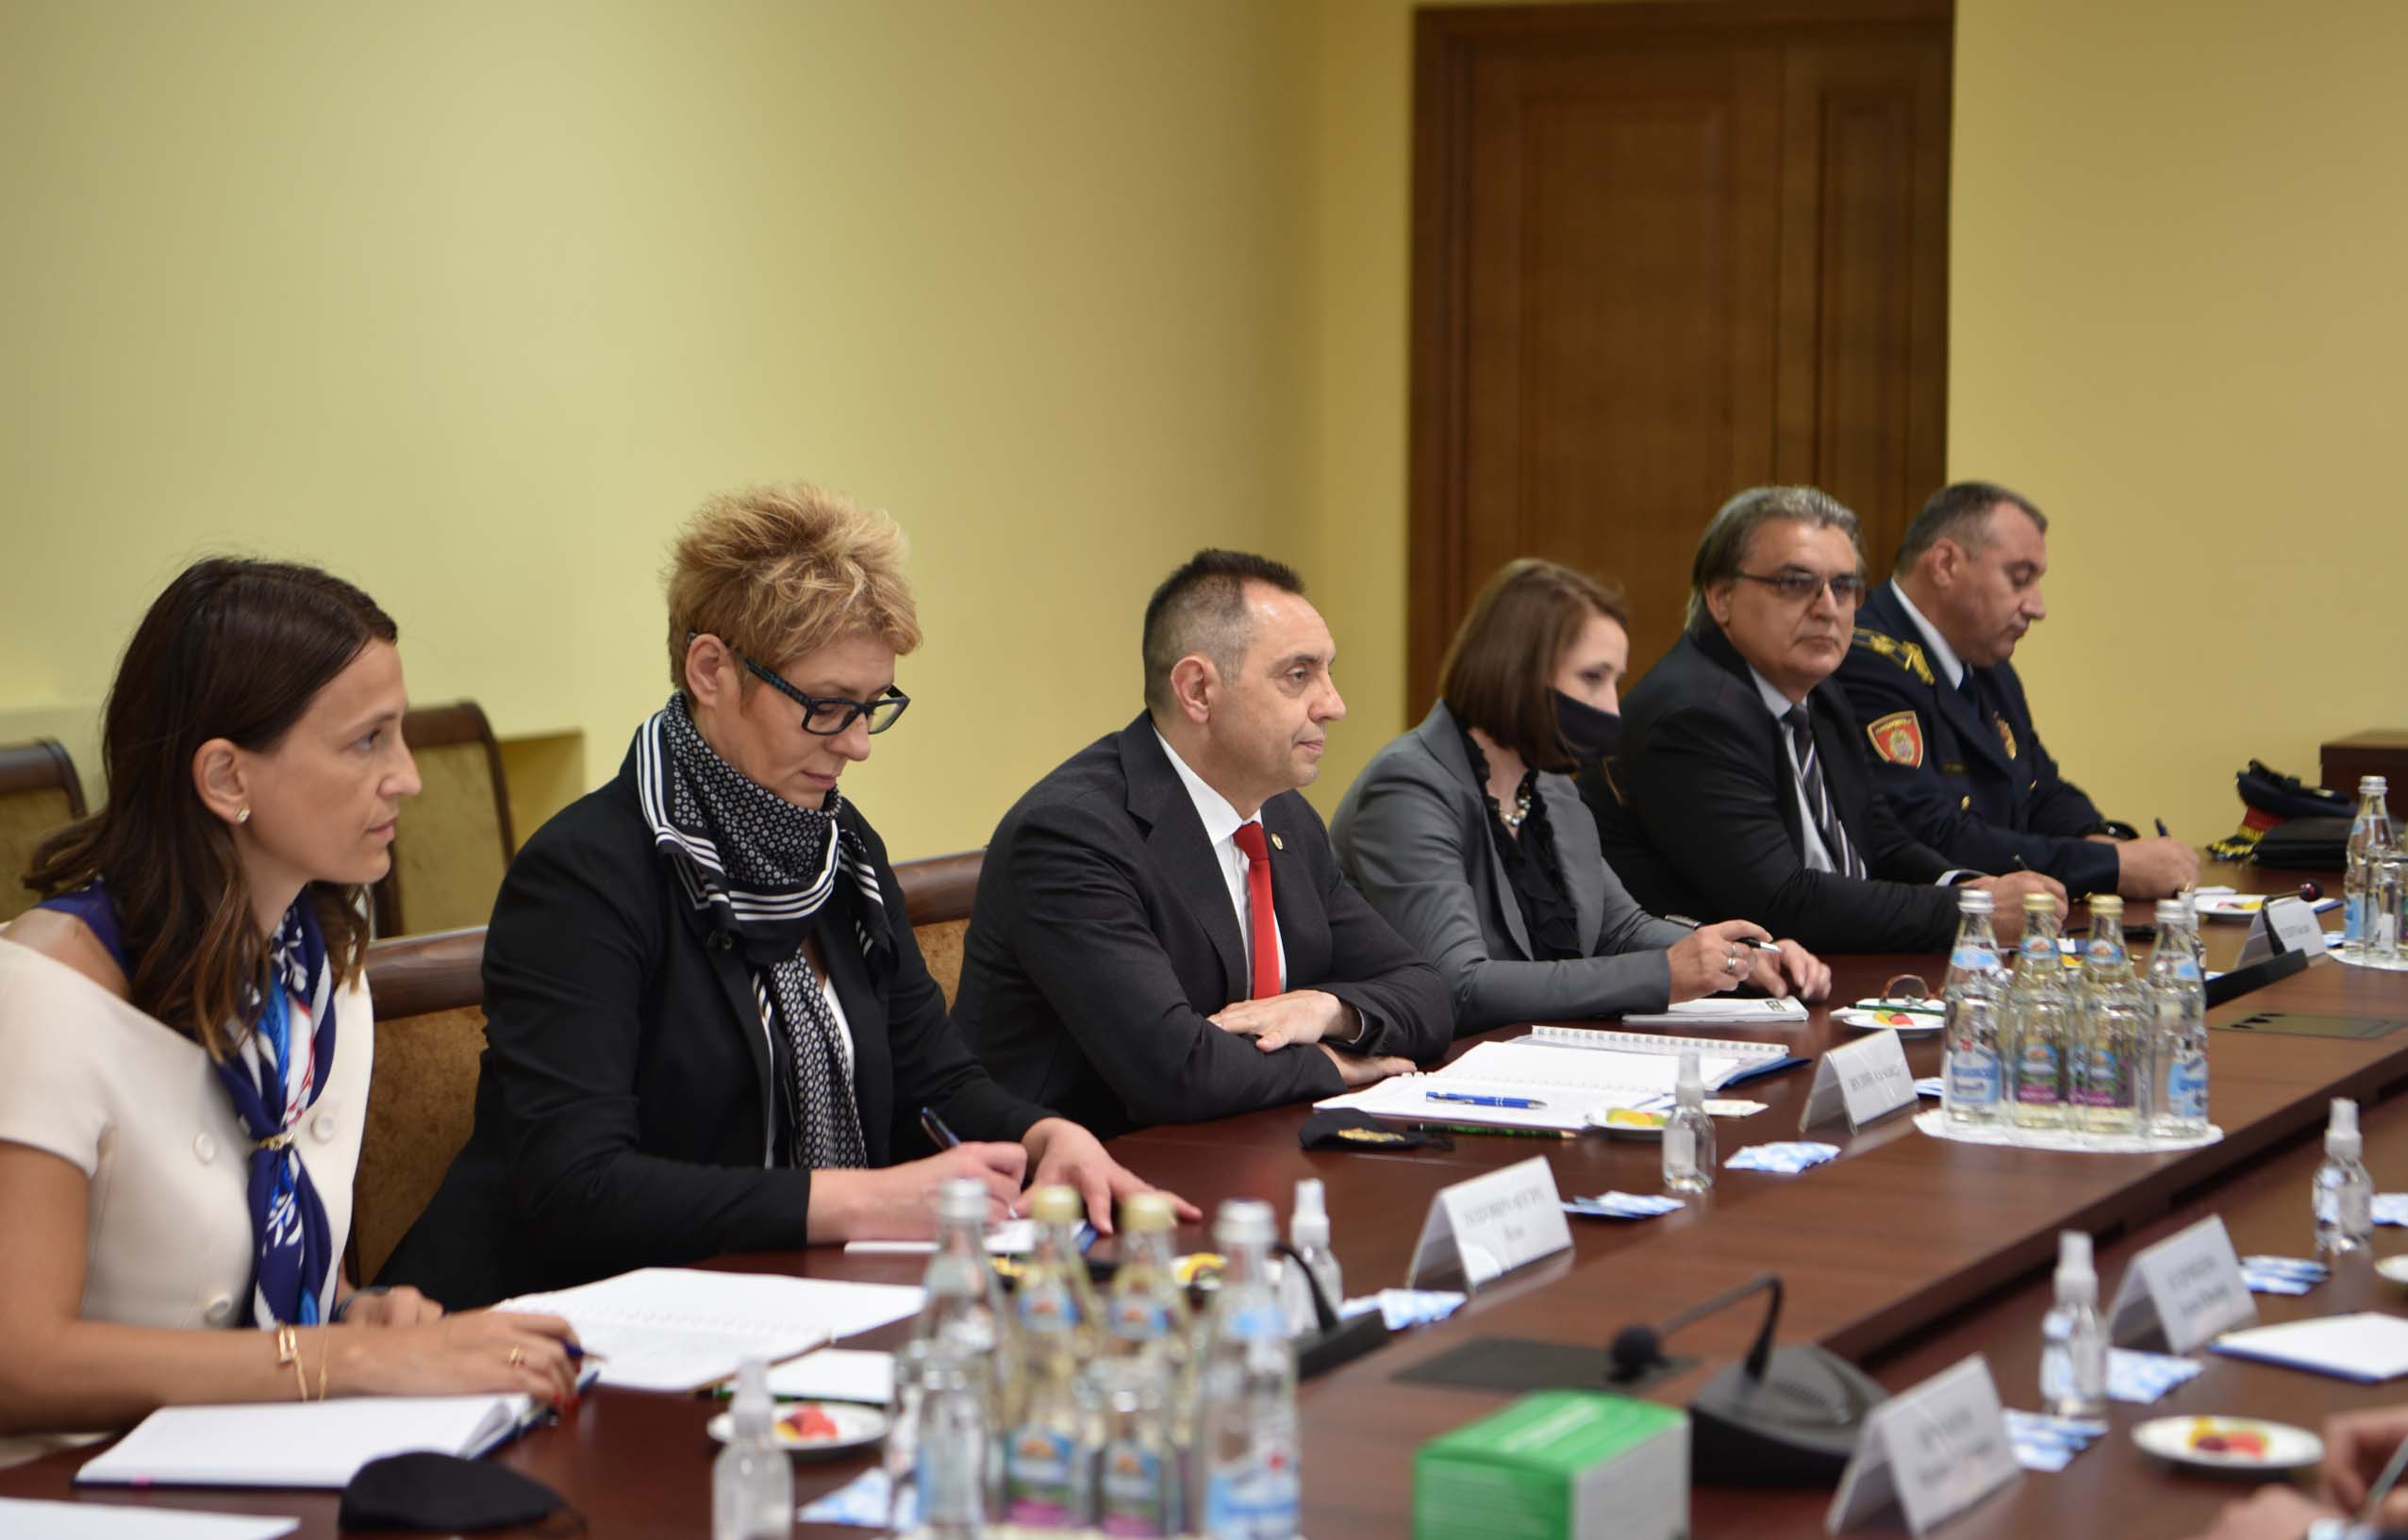 Ministar Vulin: Srbija i Rusija strateški partneri i iskreni prijatelji